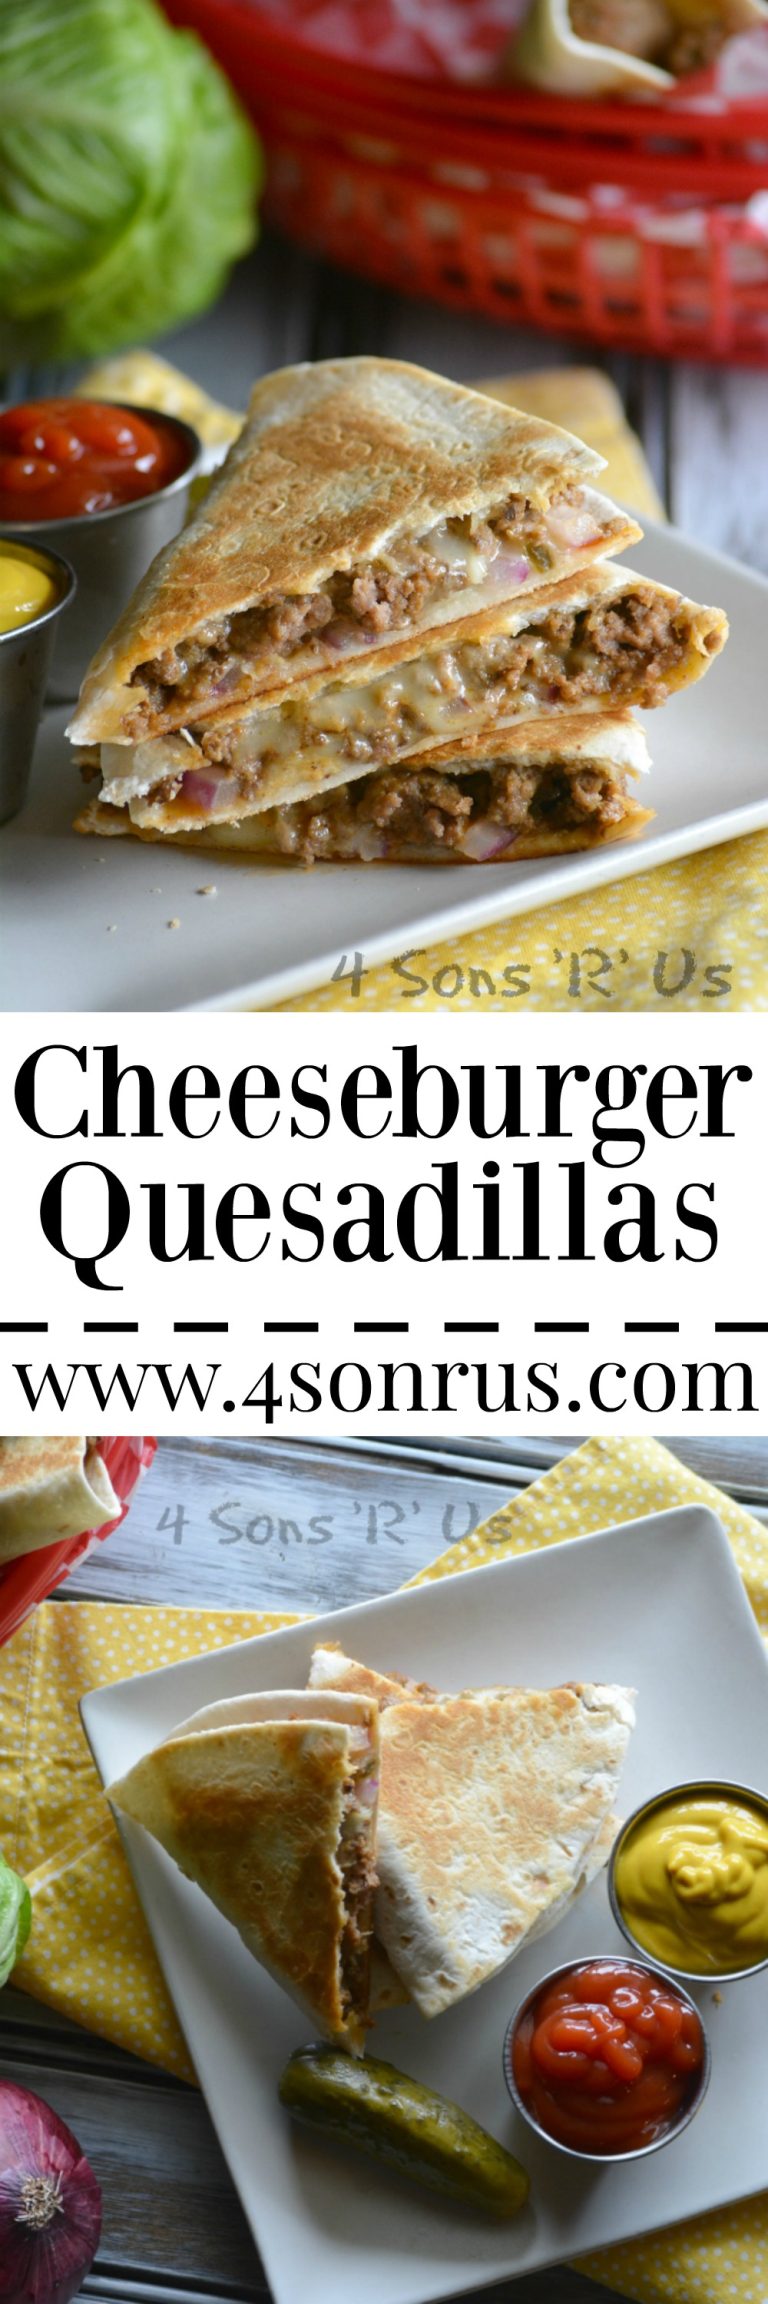 Cheeseburger Quesadillas - 4 Sons 'R' Us